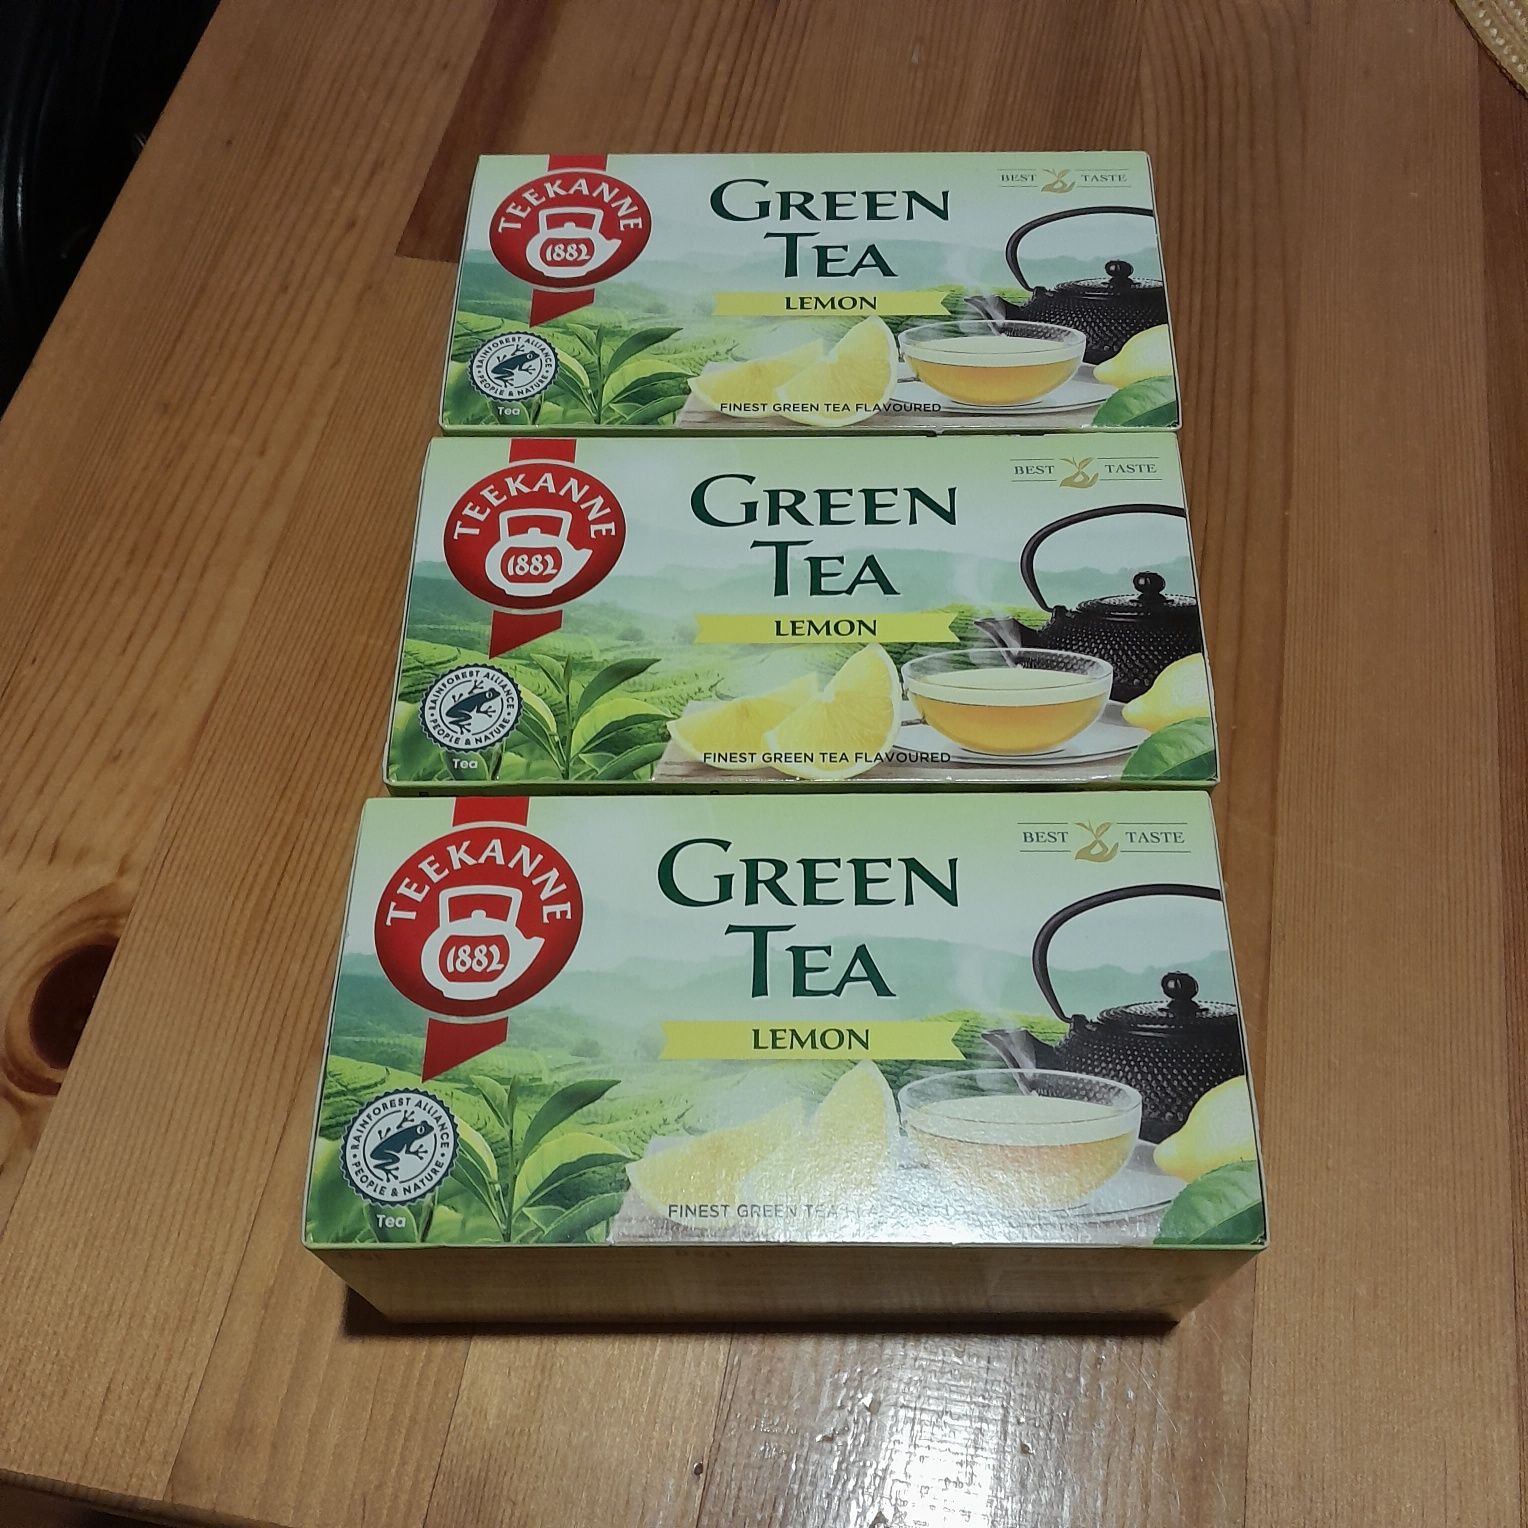 Herbata zielona teekanne nowa cytrynowa x3